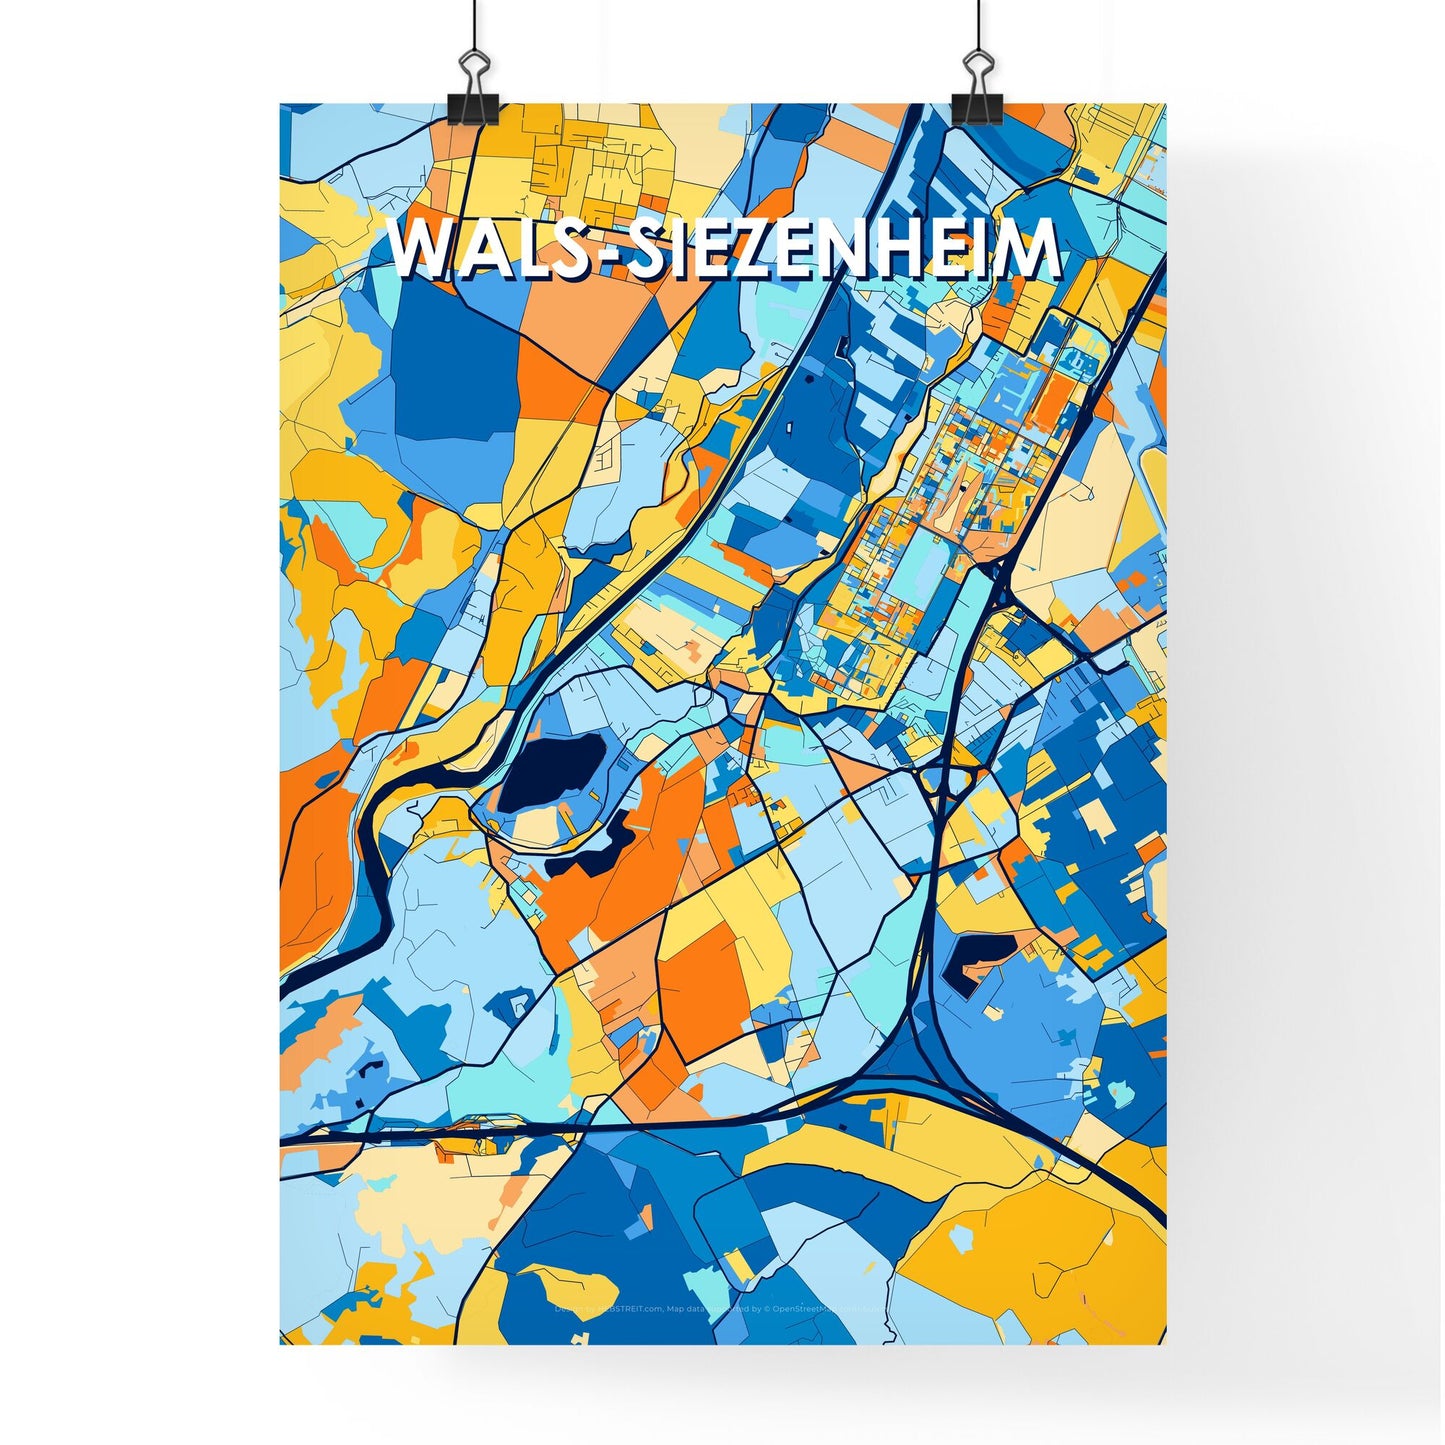 WALS-SIEZENHEIM AUSTRIA Vibrant Colorful Art Map Poster Blue Orange